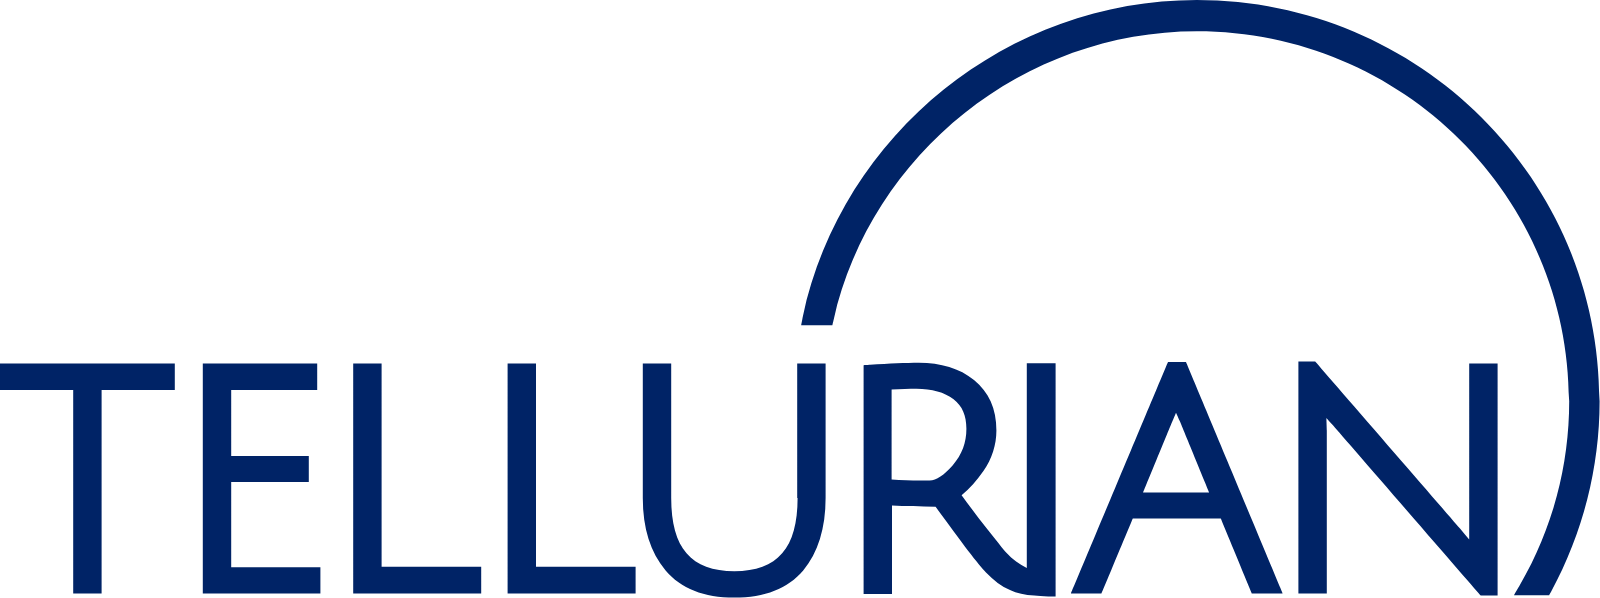 Tellurian logo large (transparent PNG)